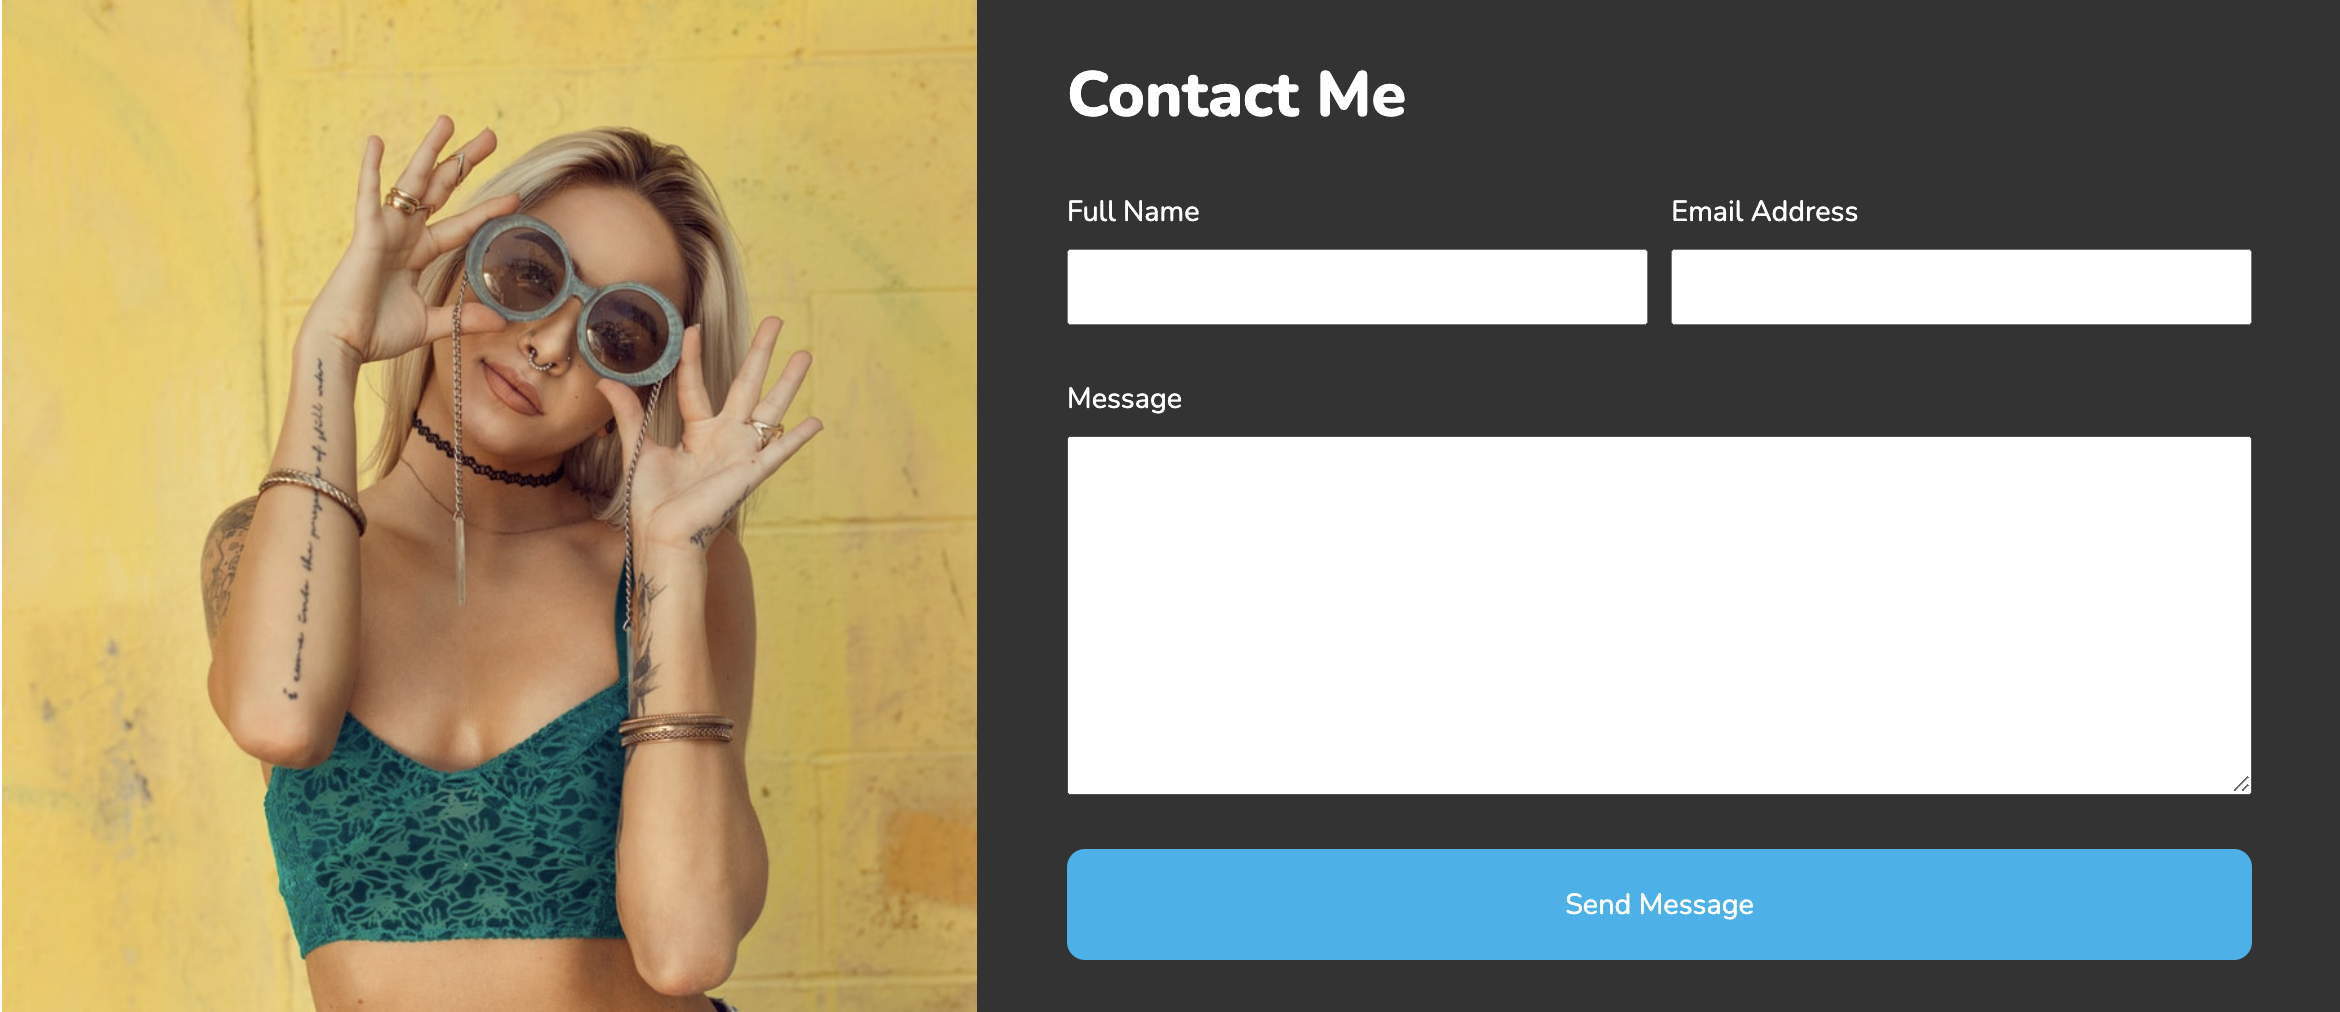 Contact designs for websites: Split-Screen Contact Form Desktop